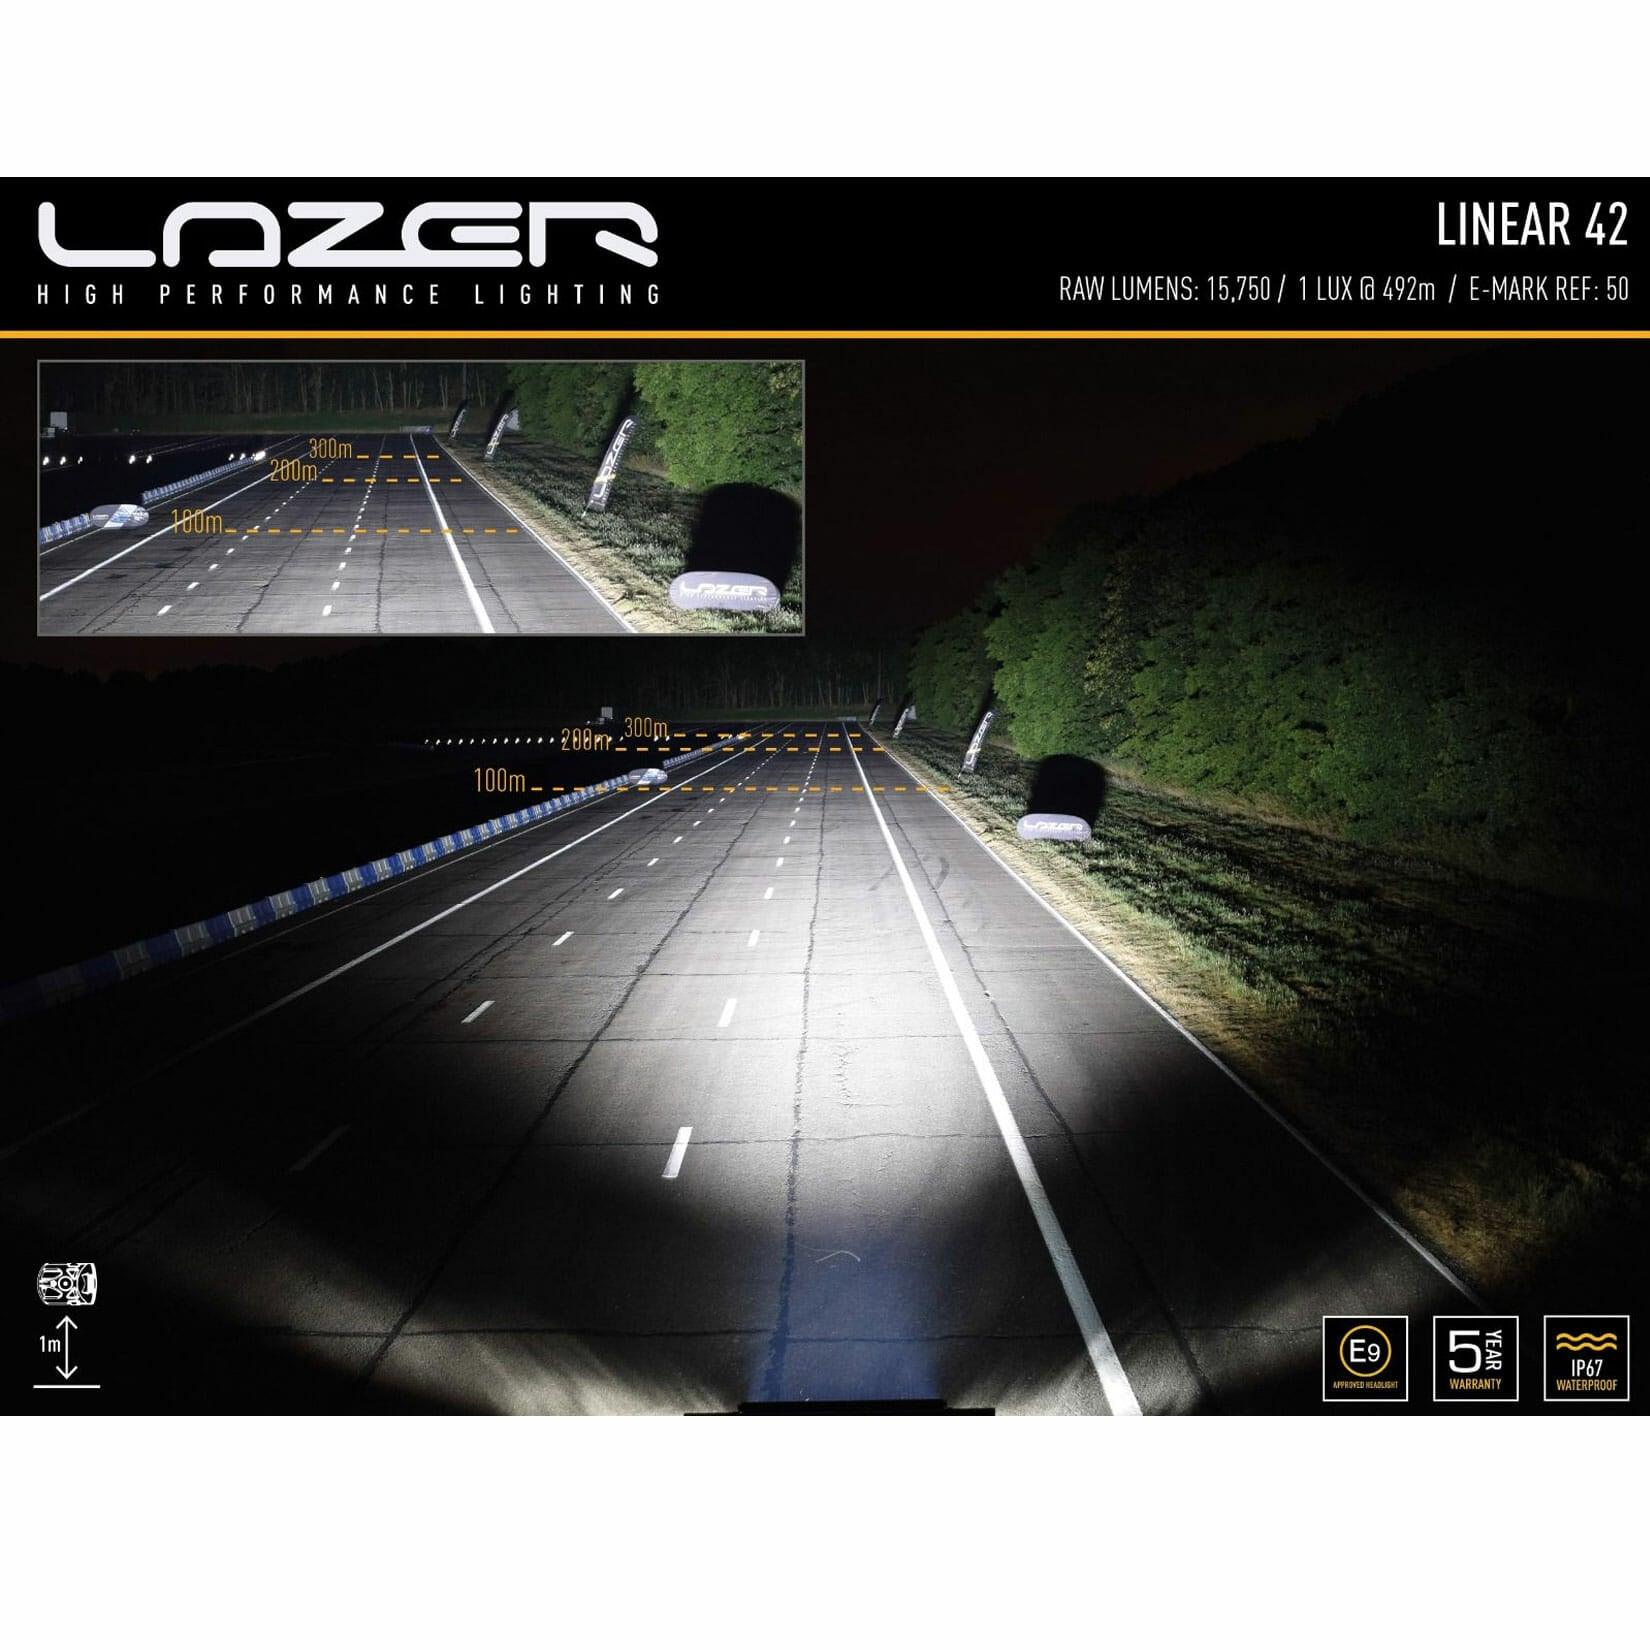 LANDROVER DEFENDER L663 2020 ON - LAZER LIGHTS ROOF MOUNT KIT - LINEAR 42 - Storm Xccessories2